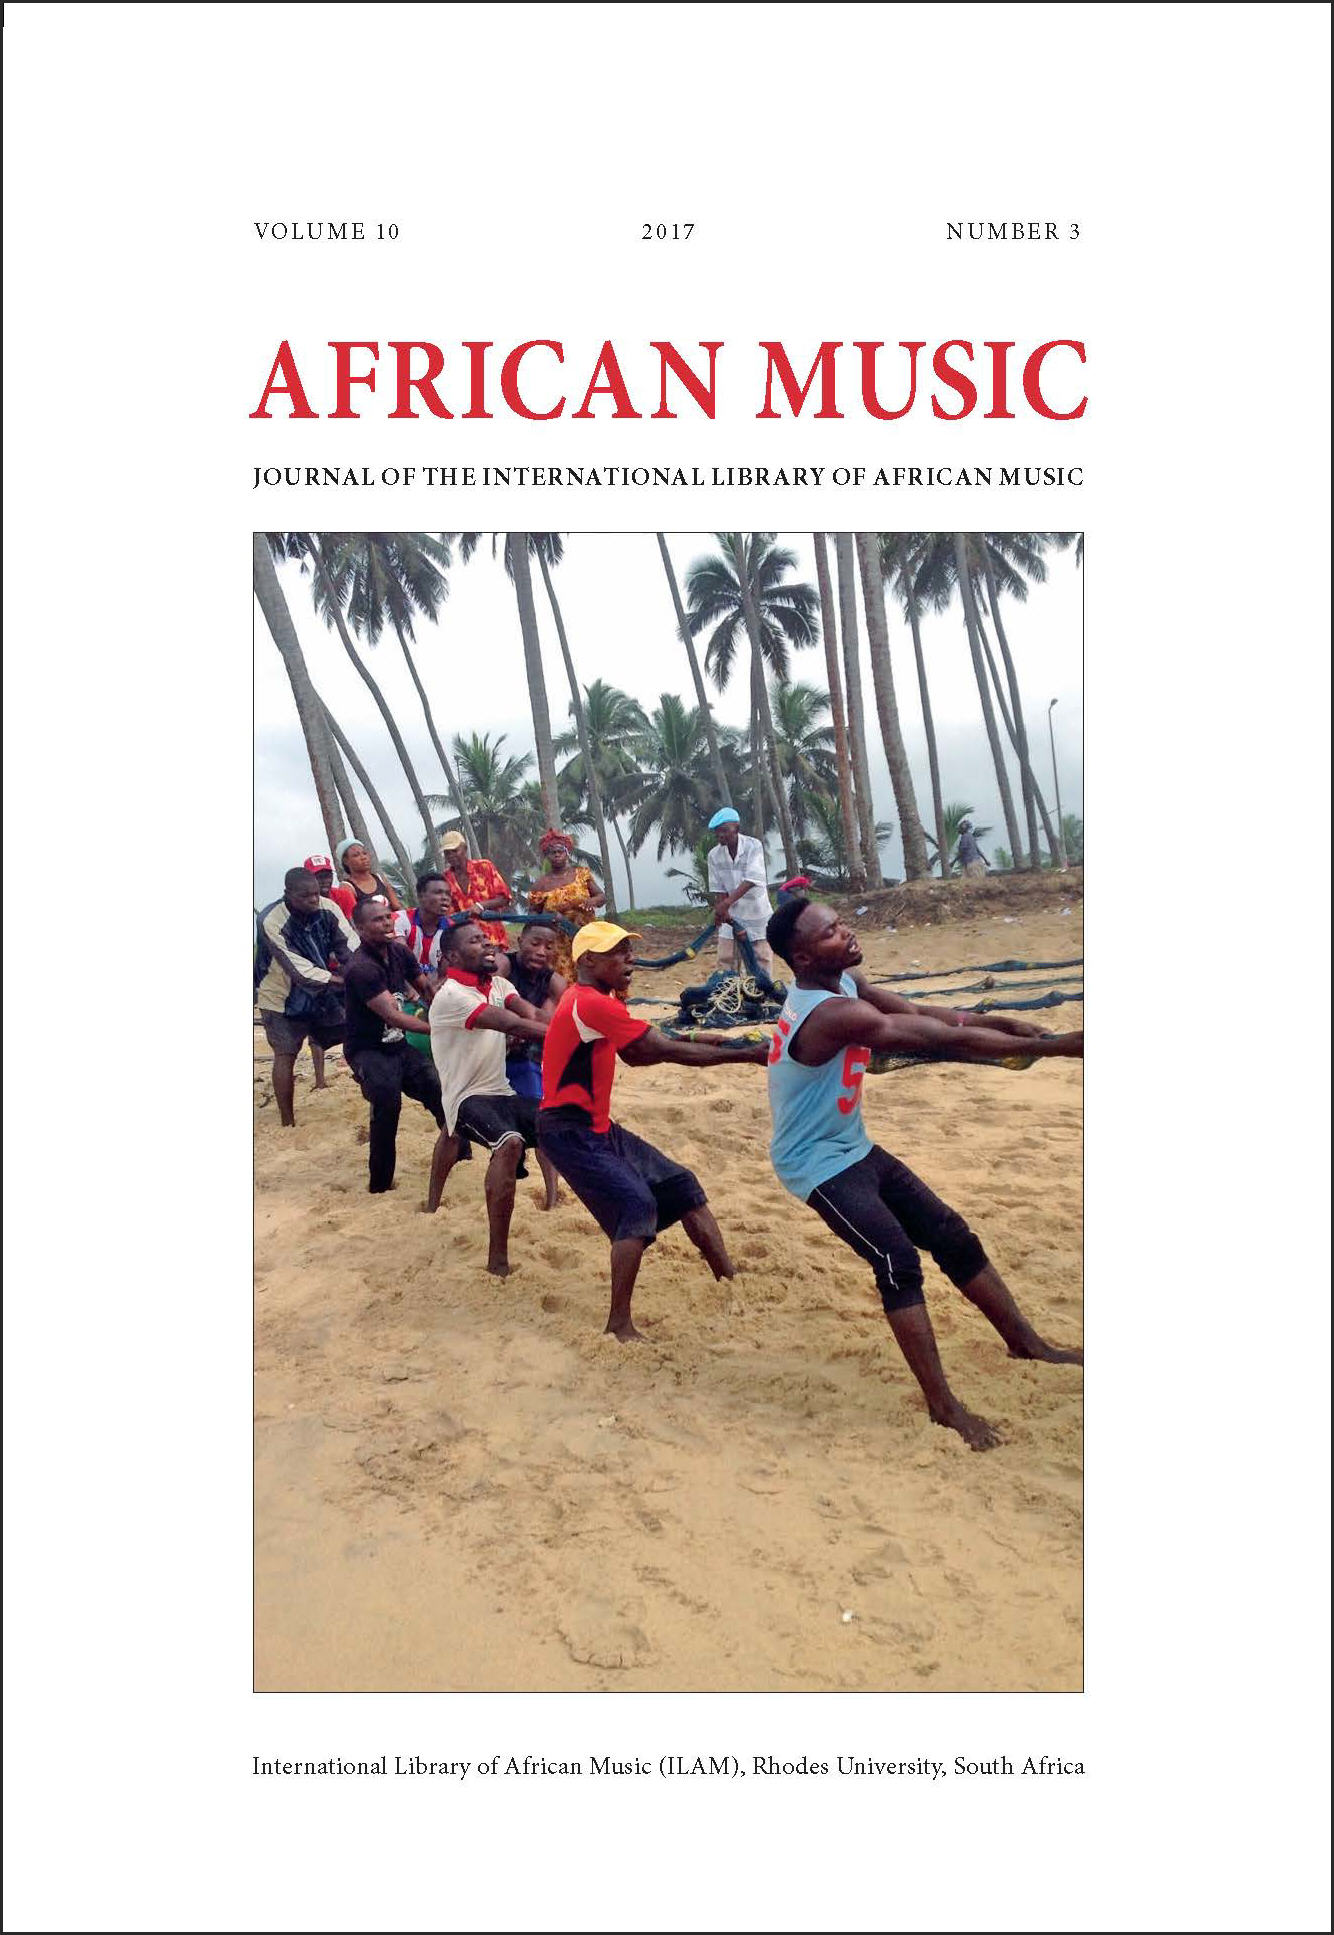 â€œHangriba.â€ Performed by the Shatta Boys, Cape Coast, Ghana.